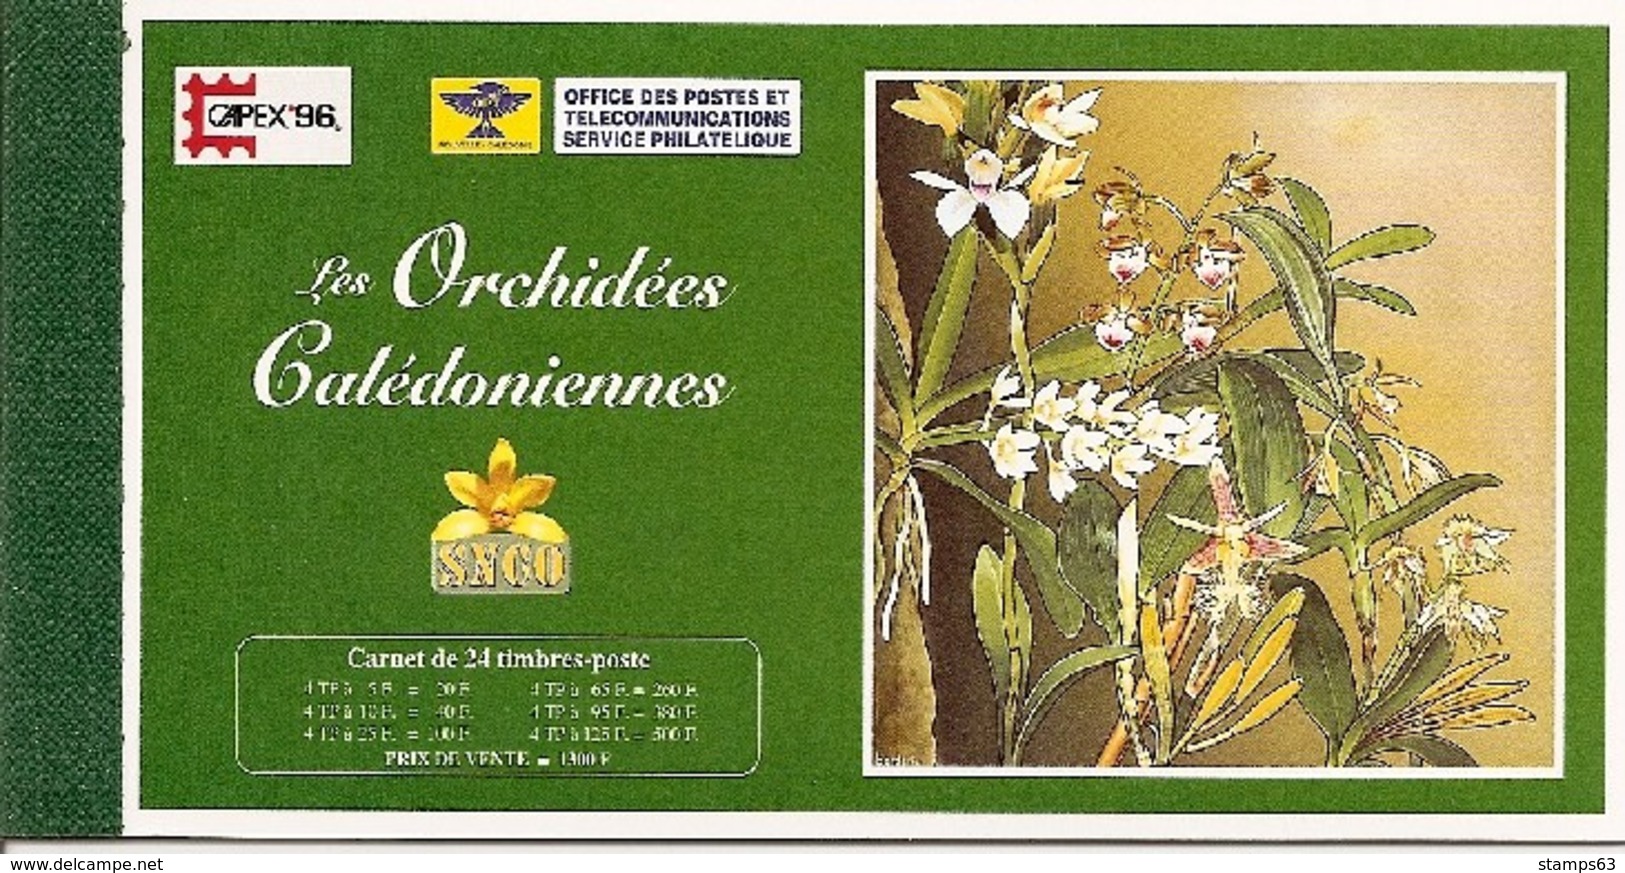 NEW CALEDONIA / NOUV CALEDONIE, 1996, Booklet / Carnet 10 , Orchids, Prestige Booklet, Capex 96 - Carnets